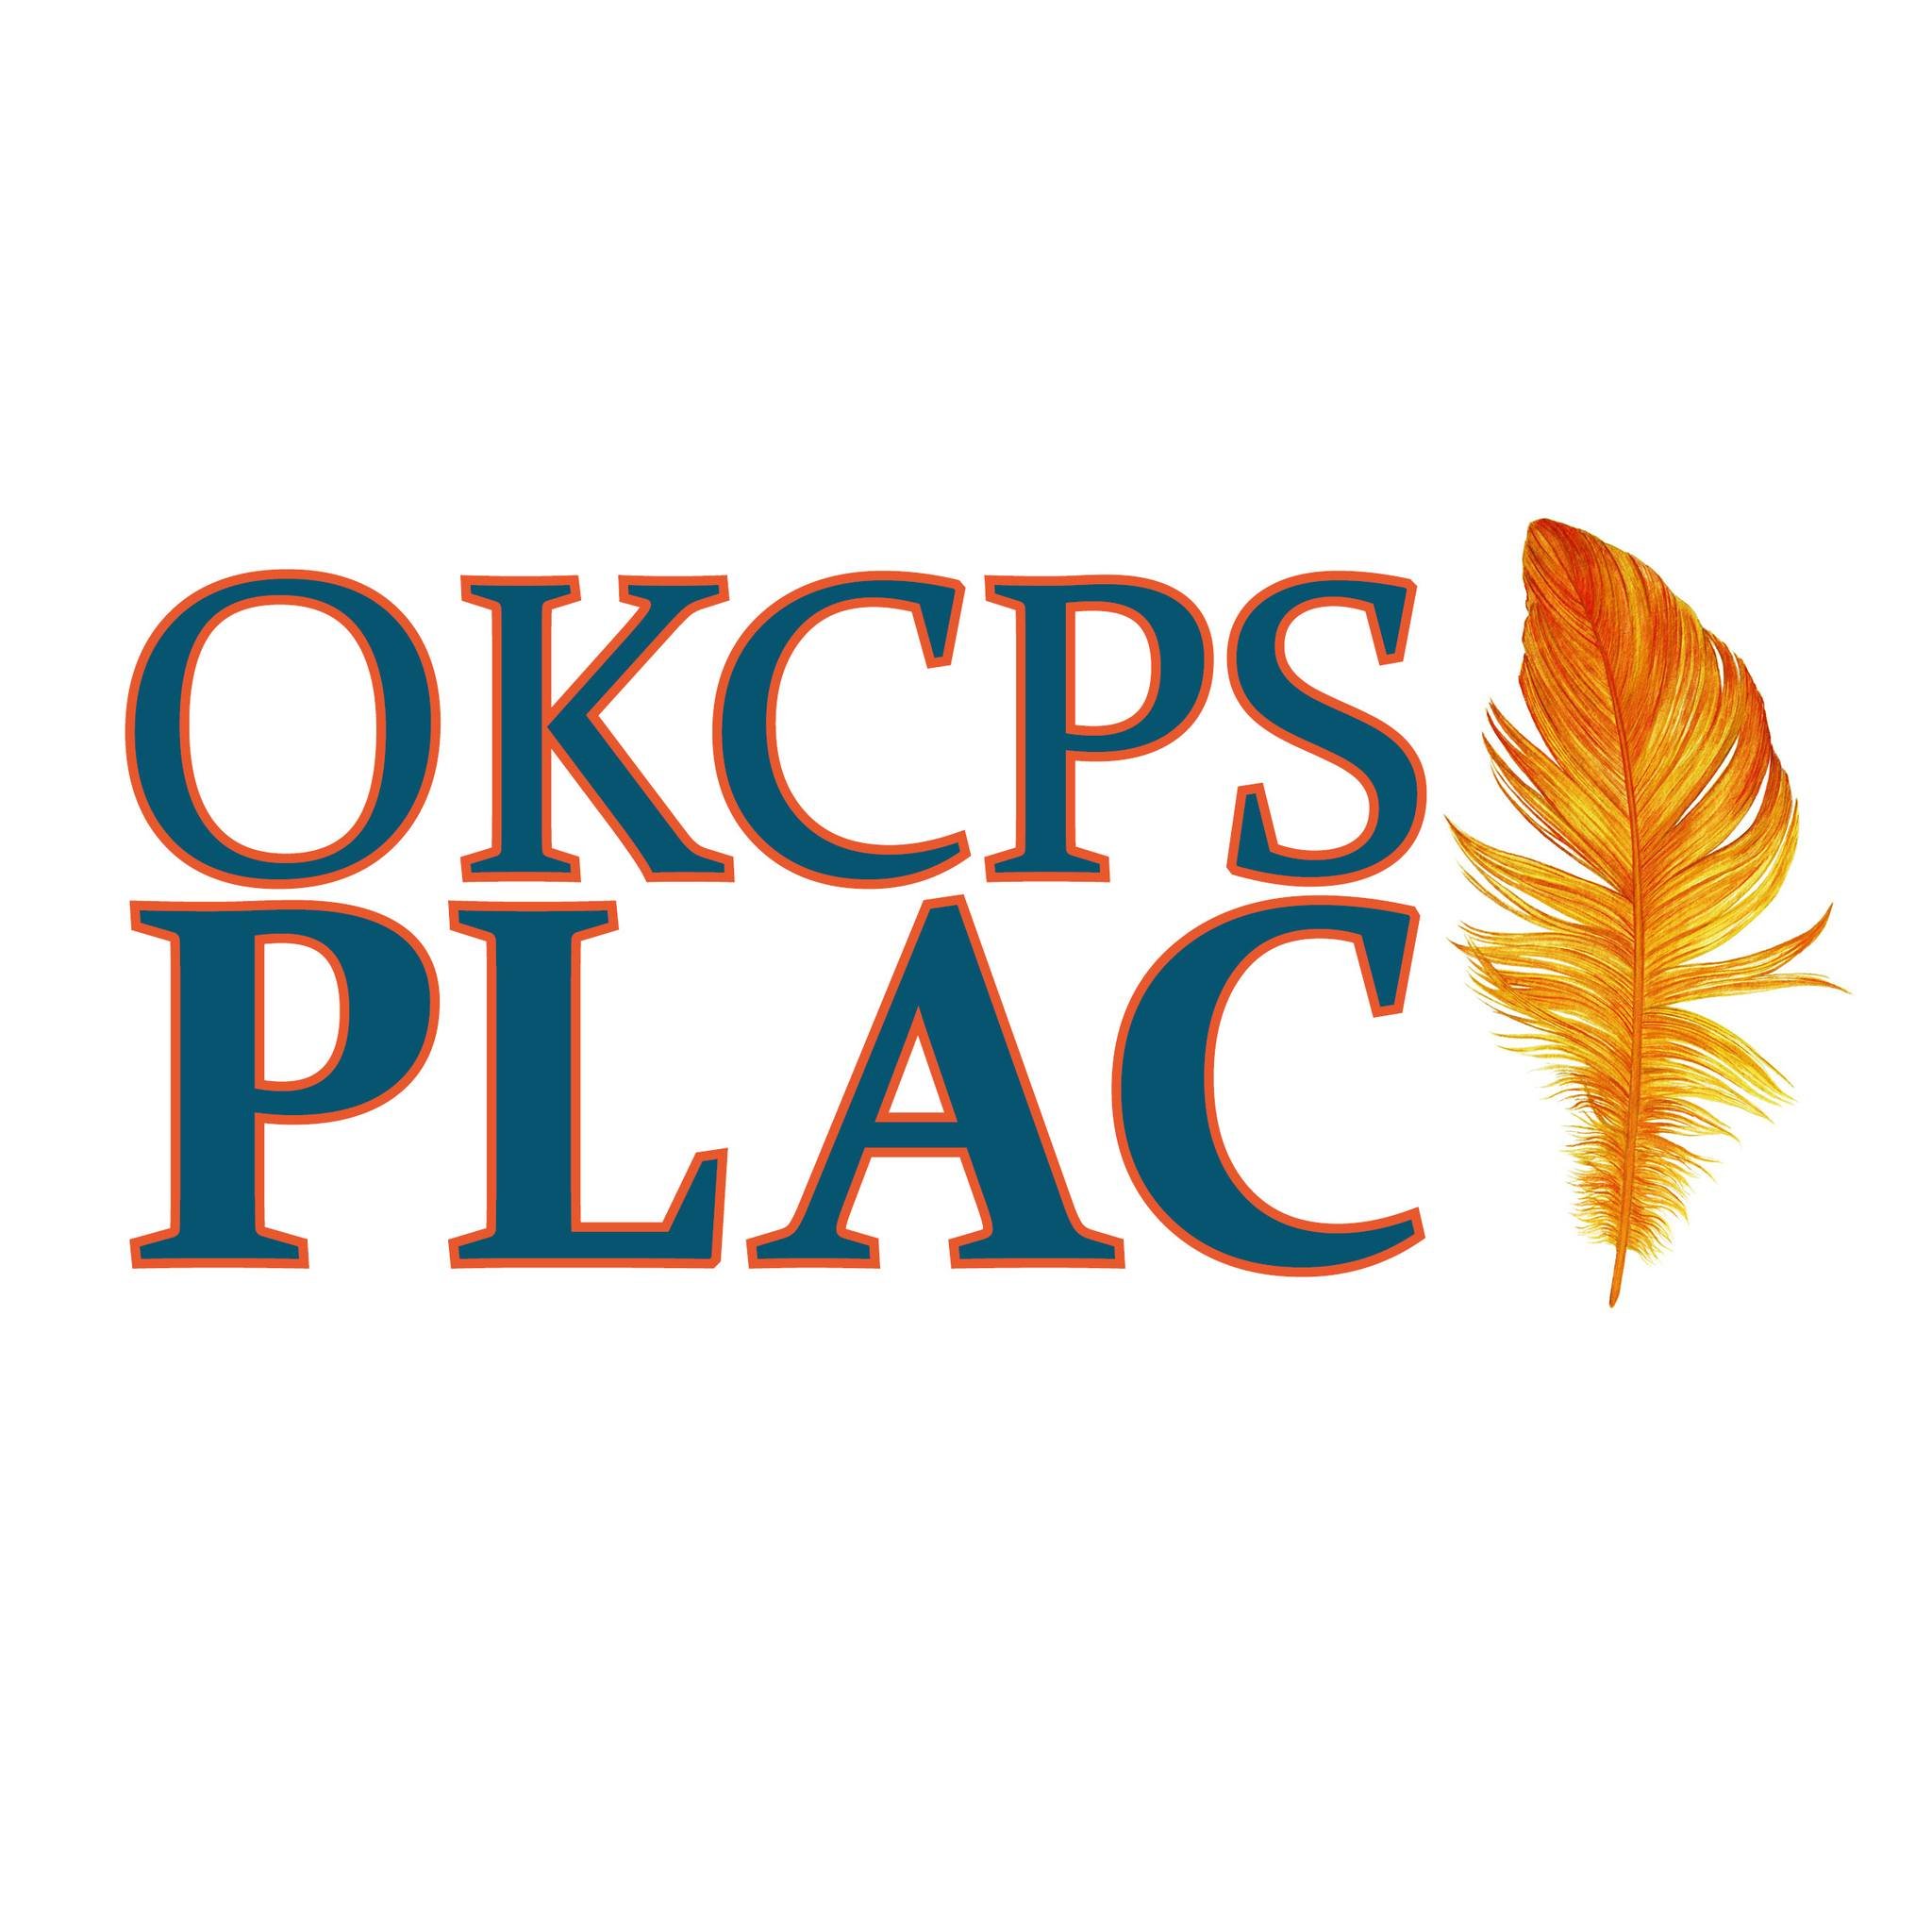 OKCPS plac.jpg